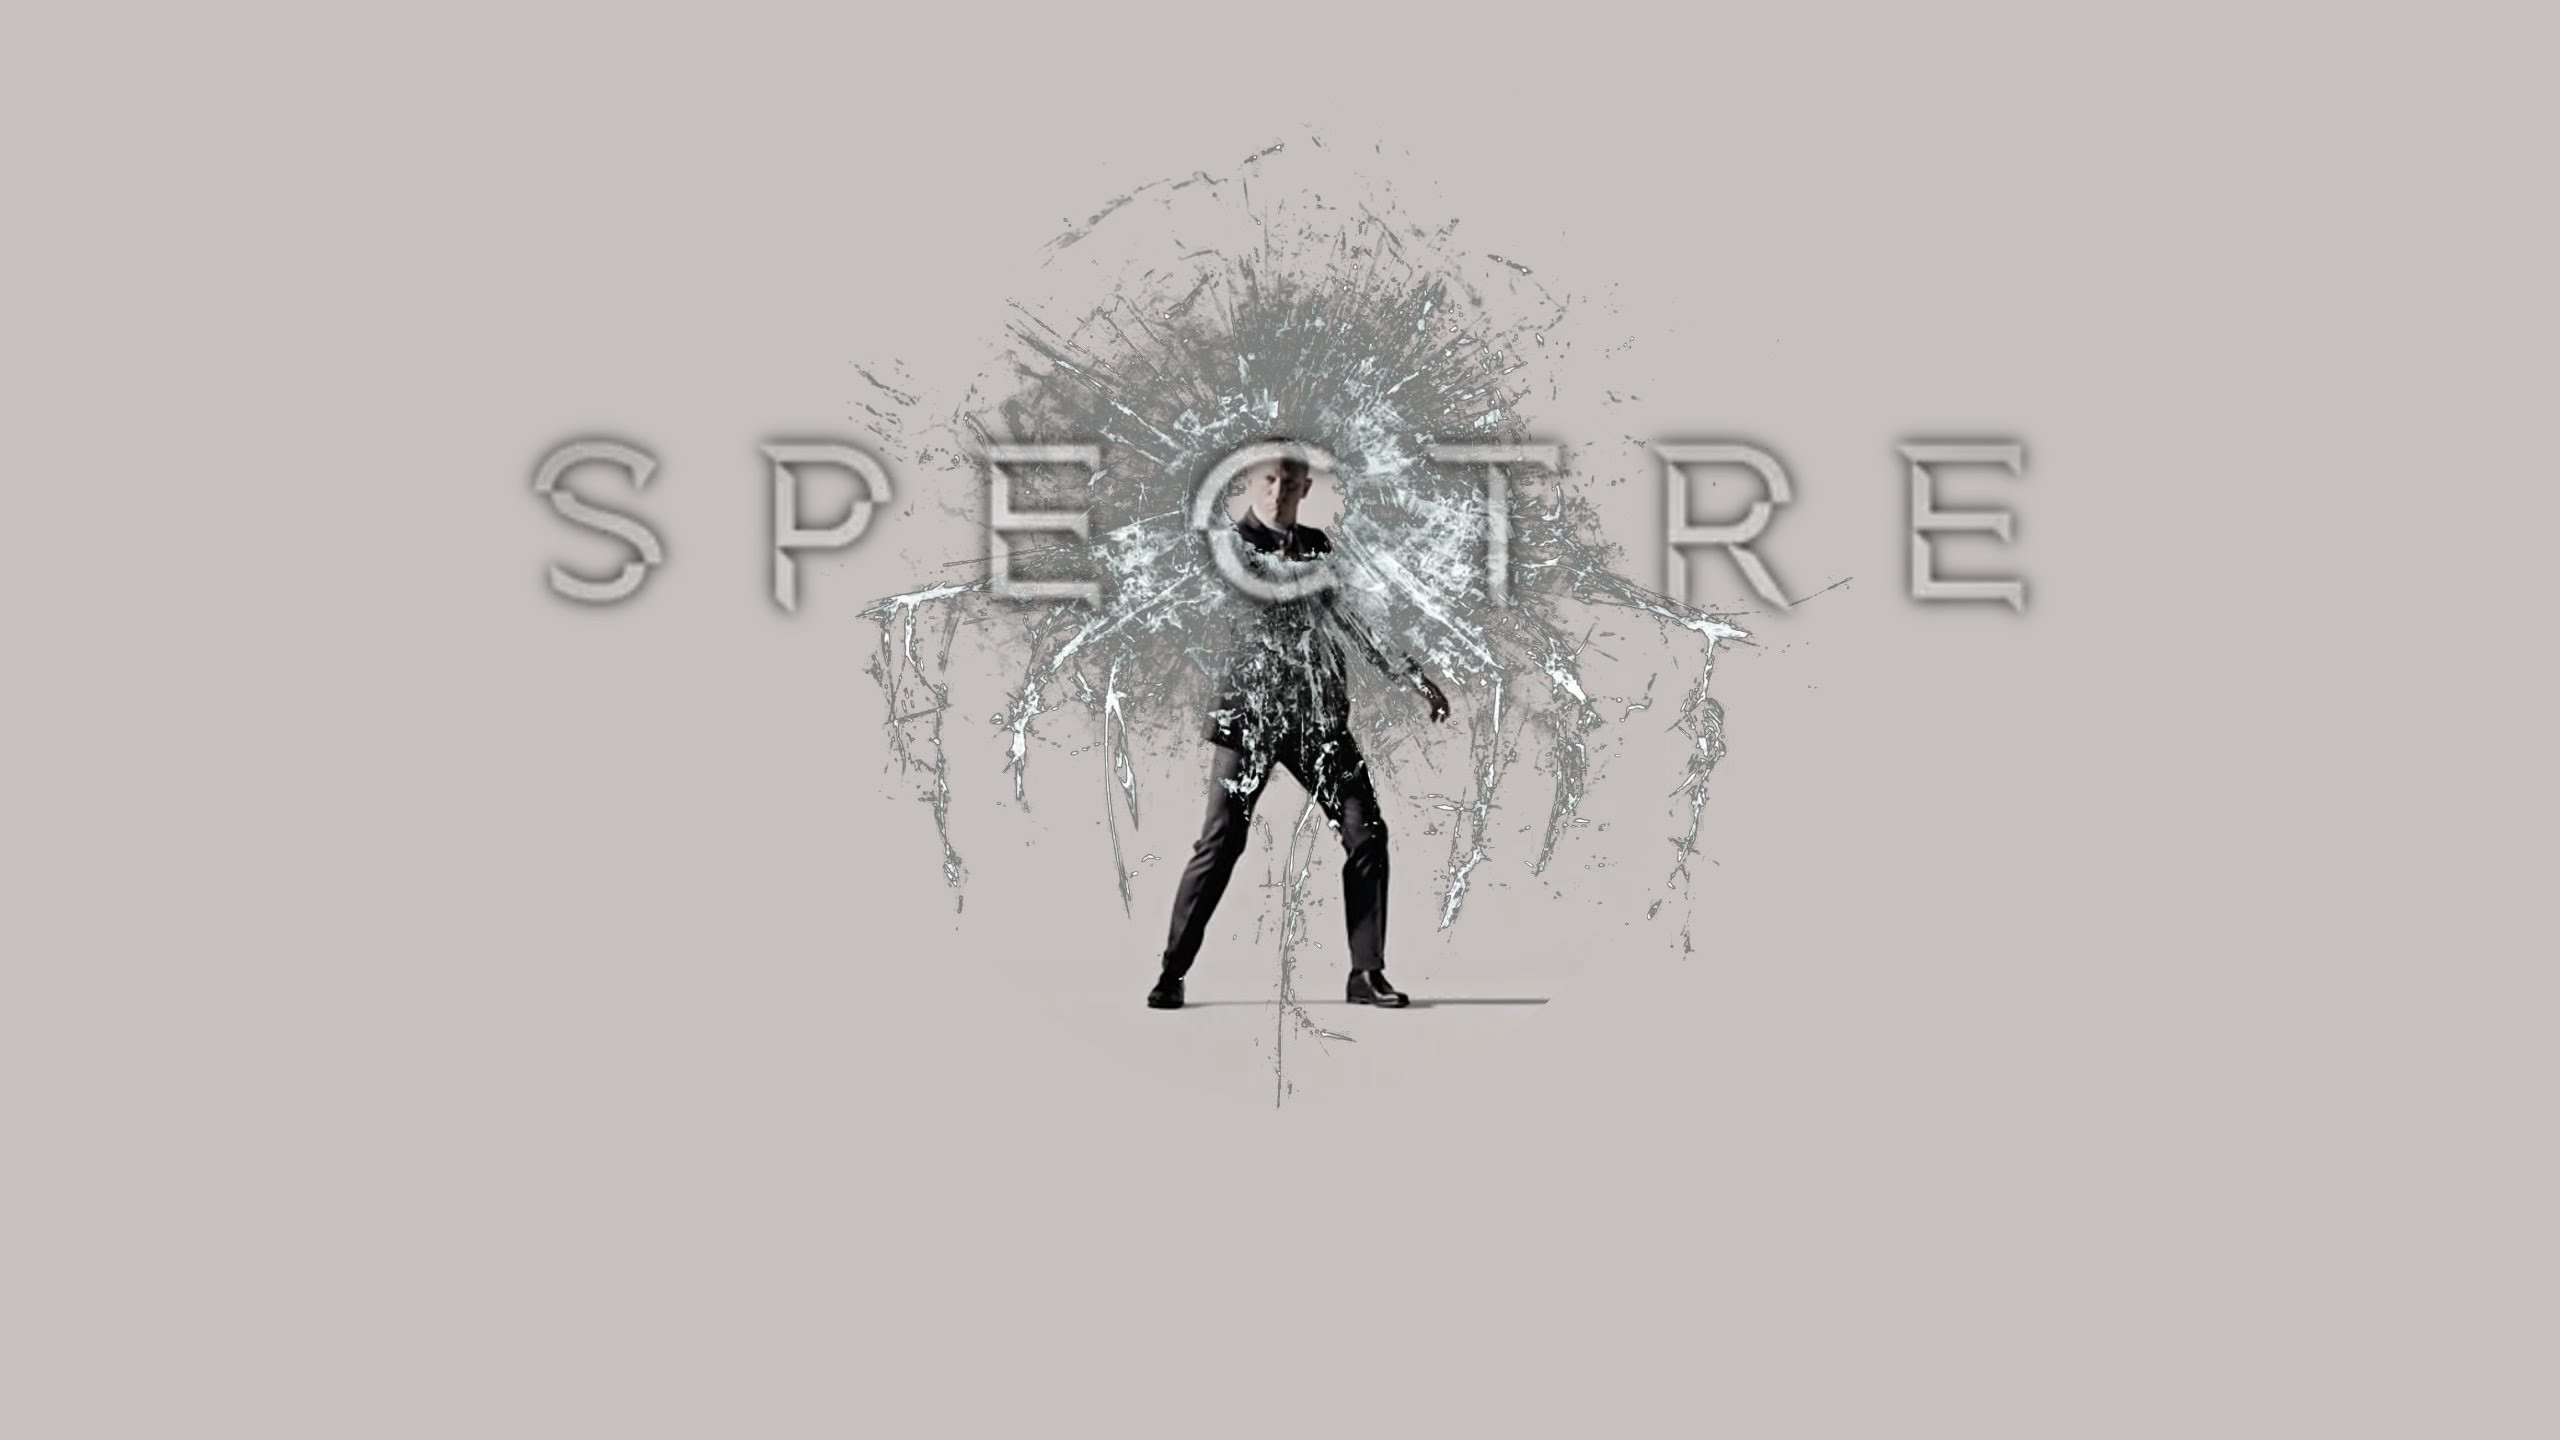 2560x1440 Spectre 2015 James Bond 007 Wallpapers | HD Wallpapers